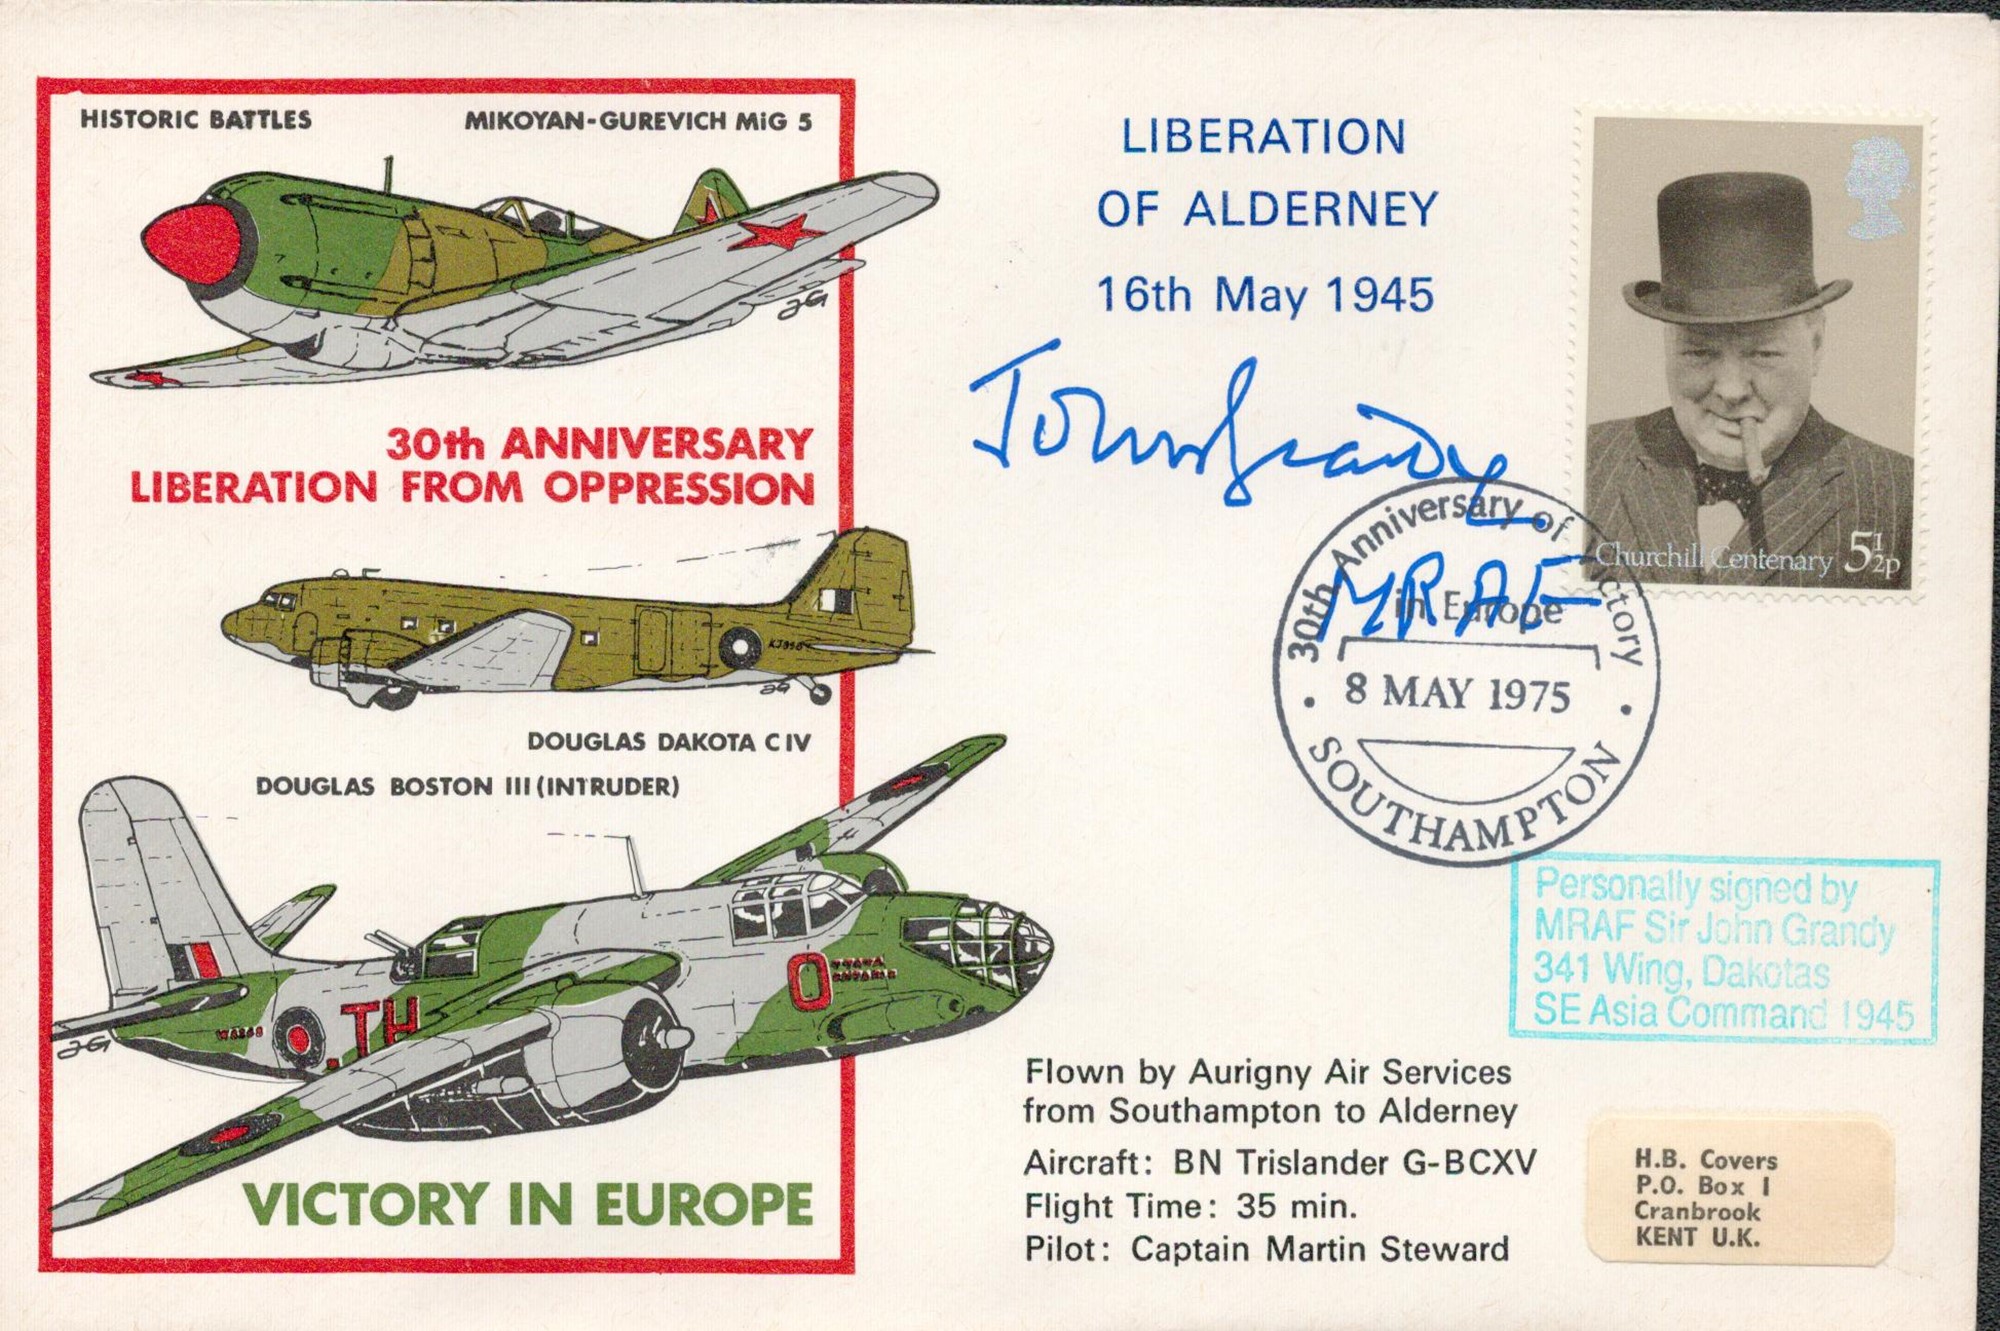 WW2 RAF Marshal of RAF Sir John Grandy Signed Liberation of Alderney 16 May 1945 FDC. Great